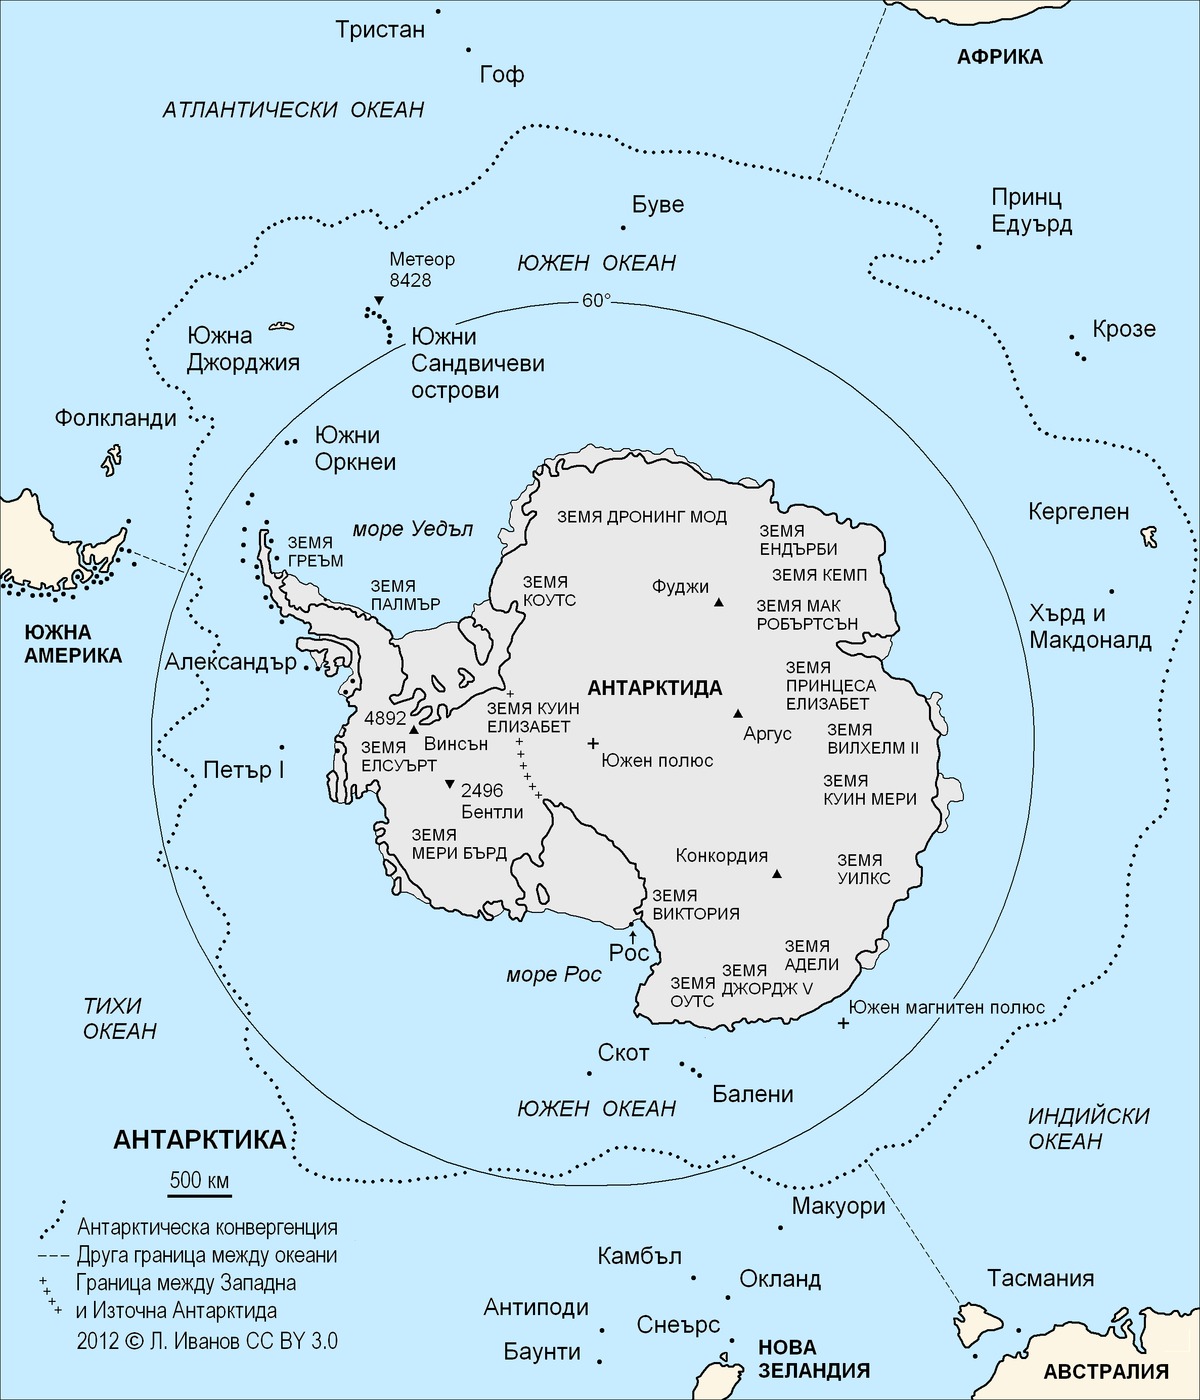 Antarctic Overview Map.tif 